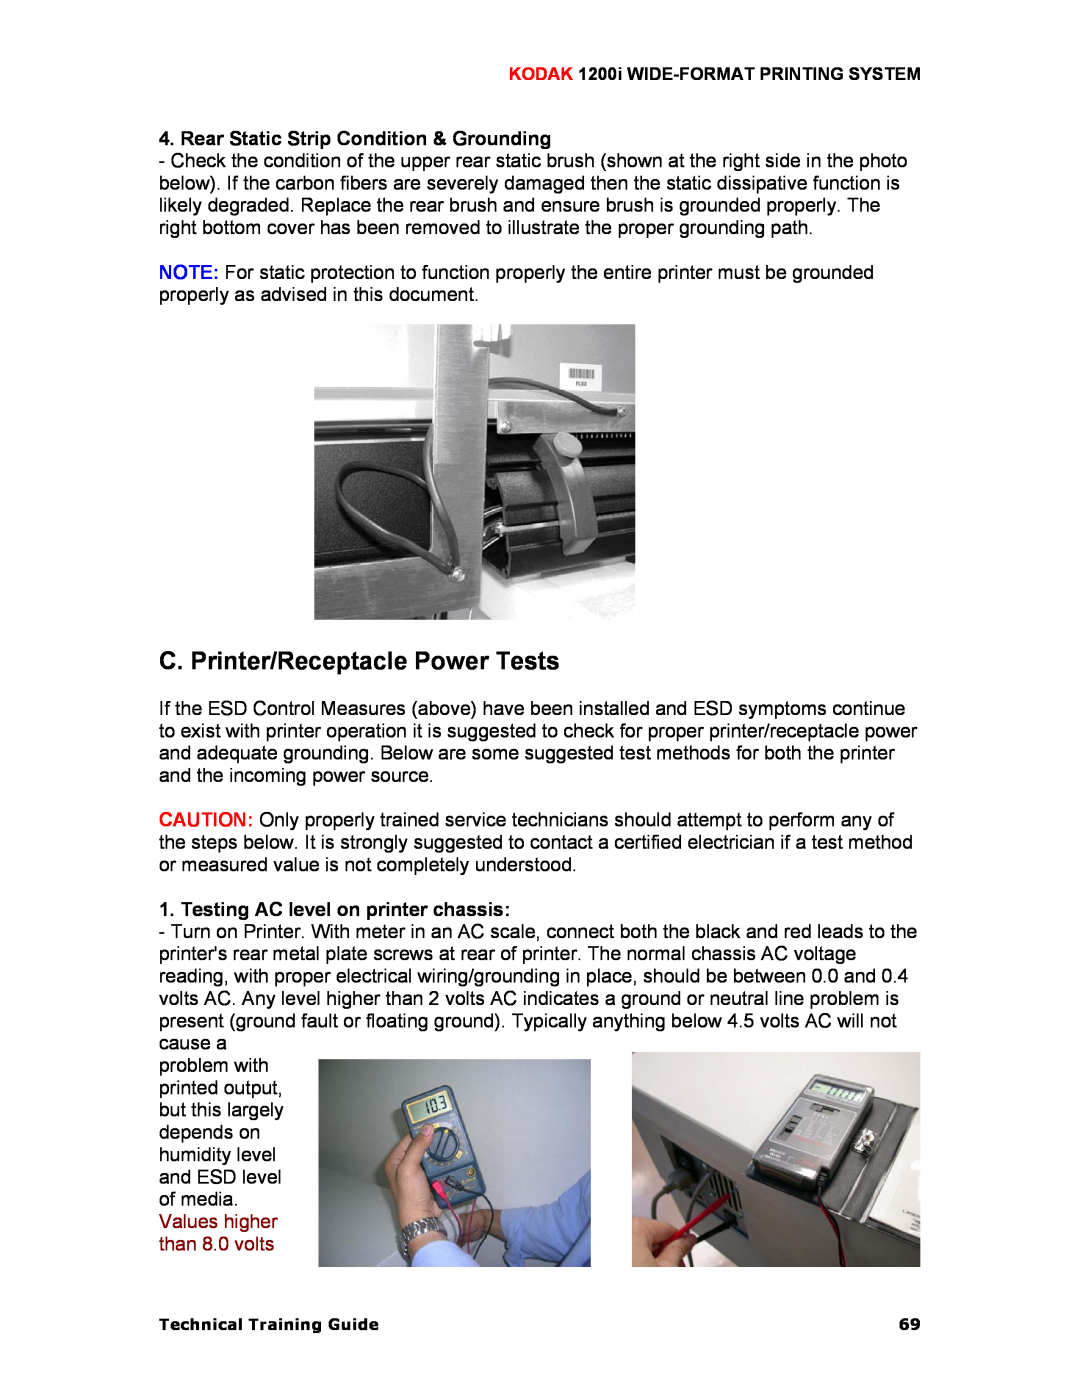 Kodak 1200I manual C. Printer/Receptacle Power Tests, Rear Static Strip Condition & Grounding 